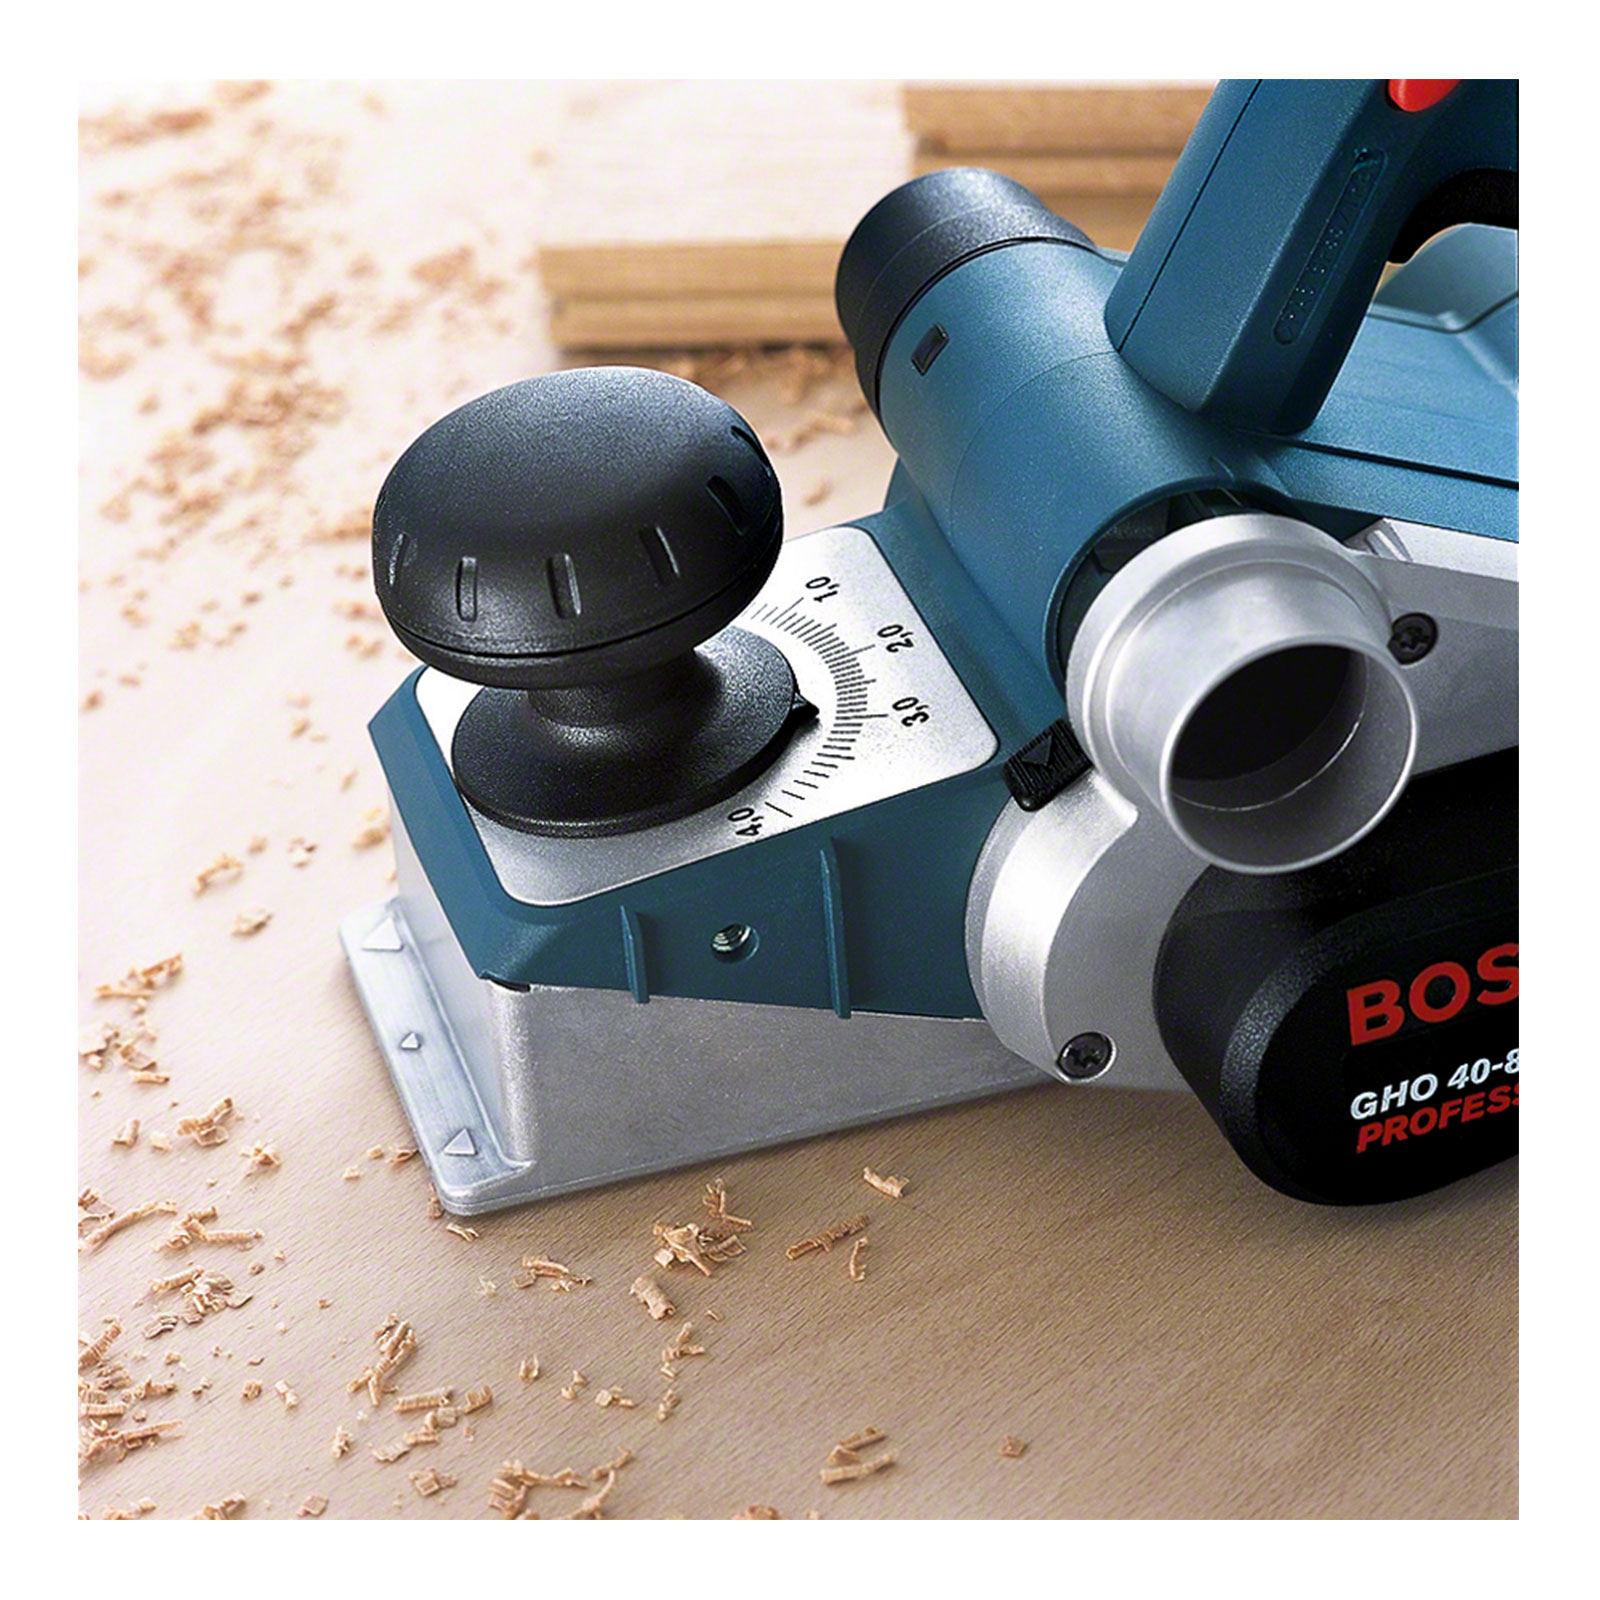 Bosch Professional GHO 40 - 82 C (L) Elektrischer Hobel